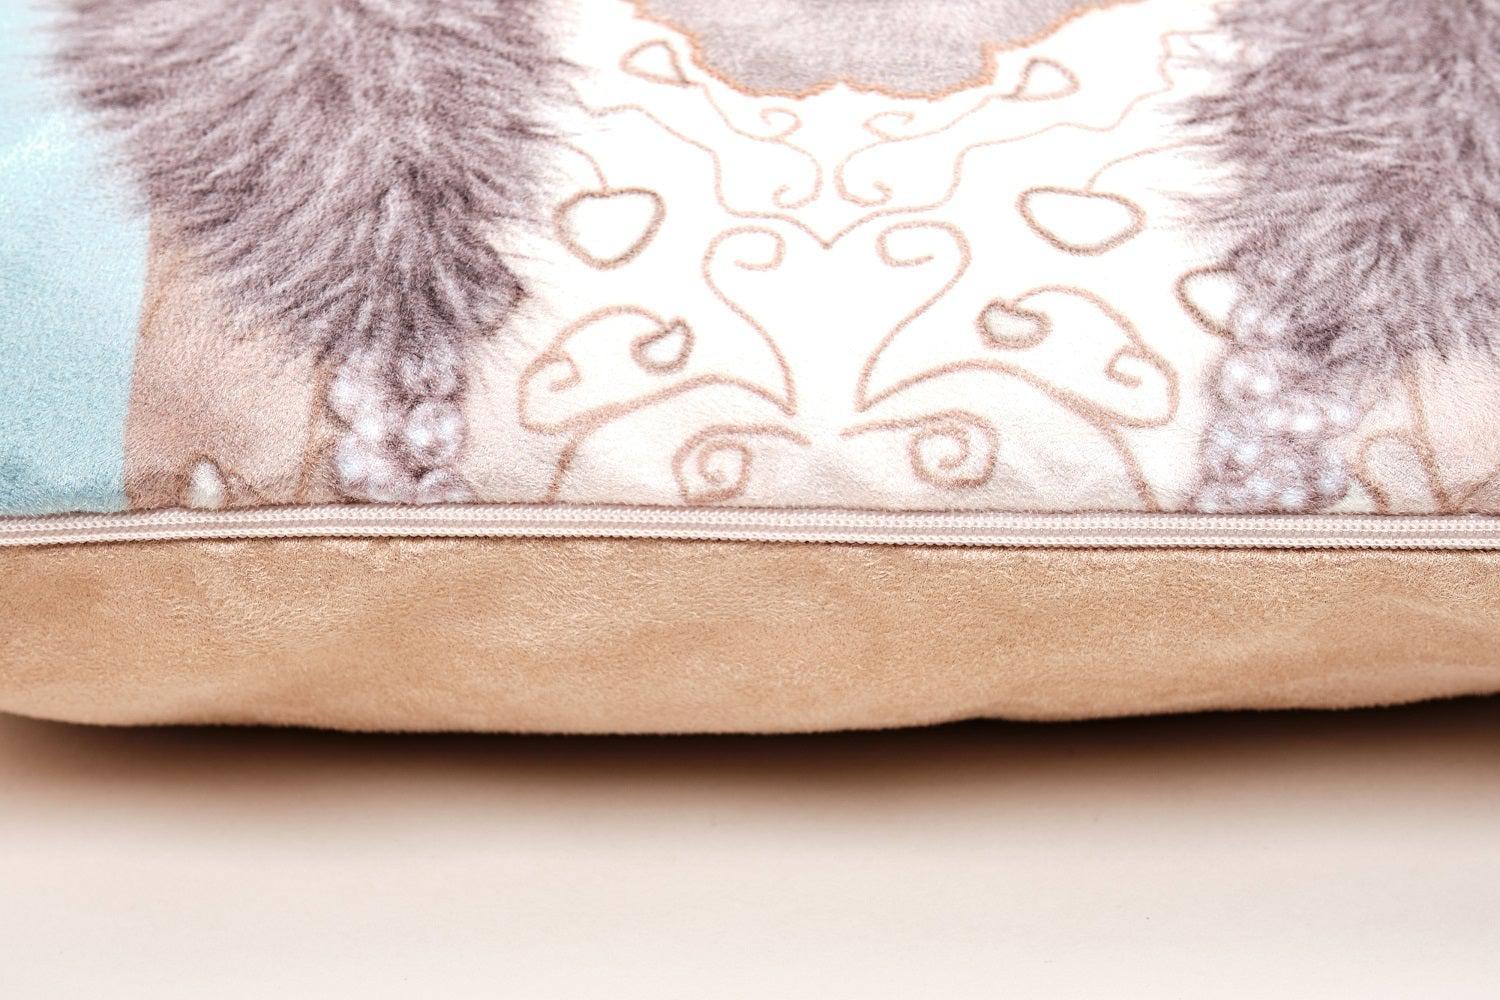 Syringa Hyacinthiflora Maureen - Alfred Wise Cushion - Handmade Cushions UK - WeLoveCushions